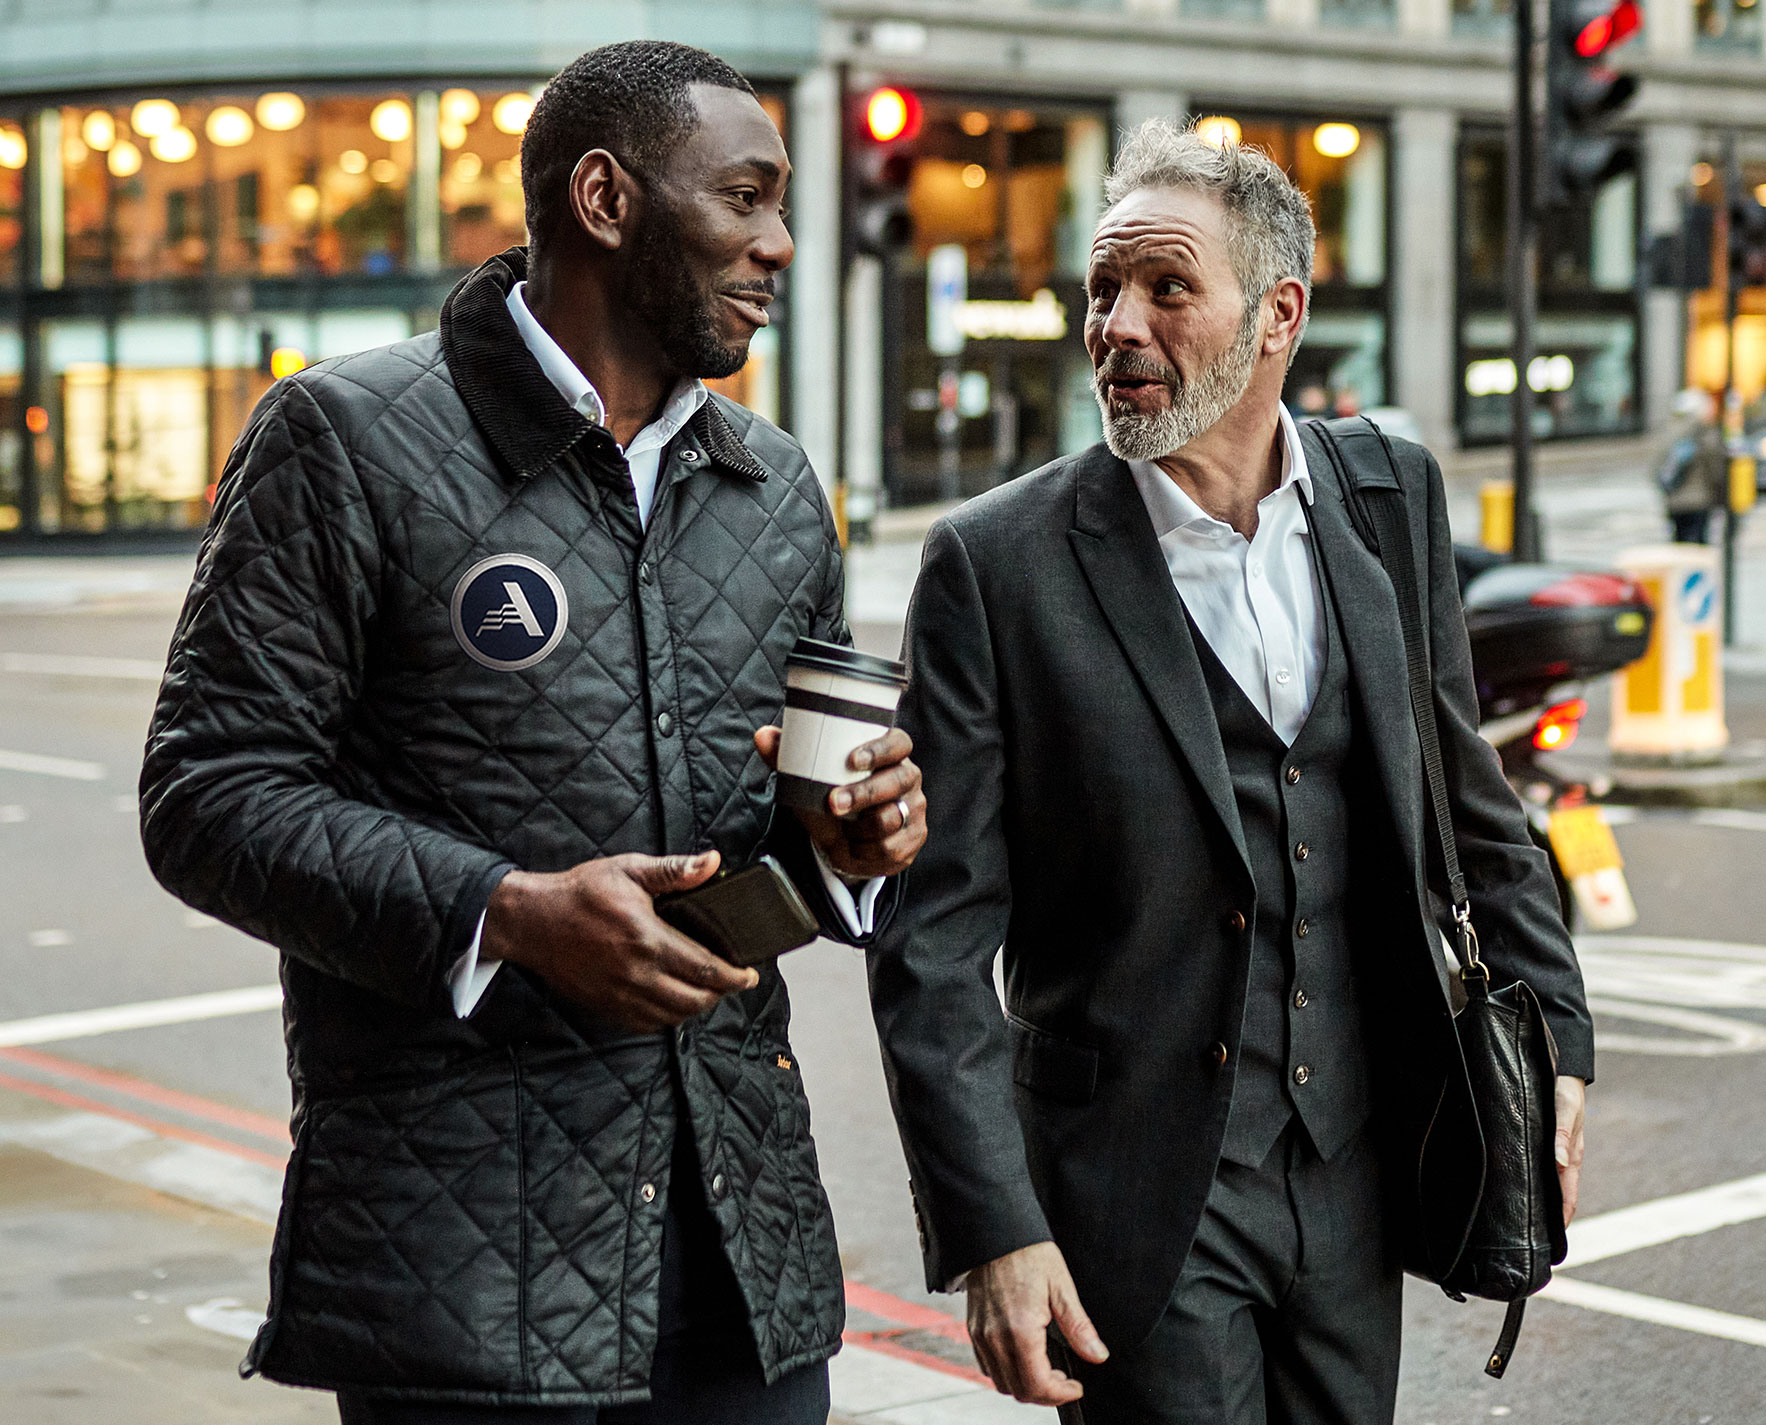 Two men walking across a city street talking to each other